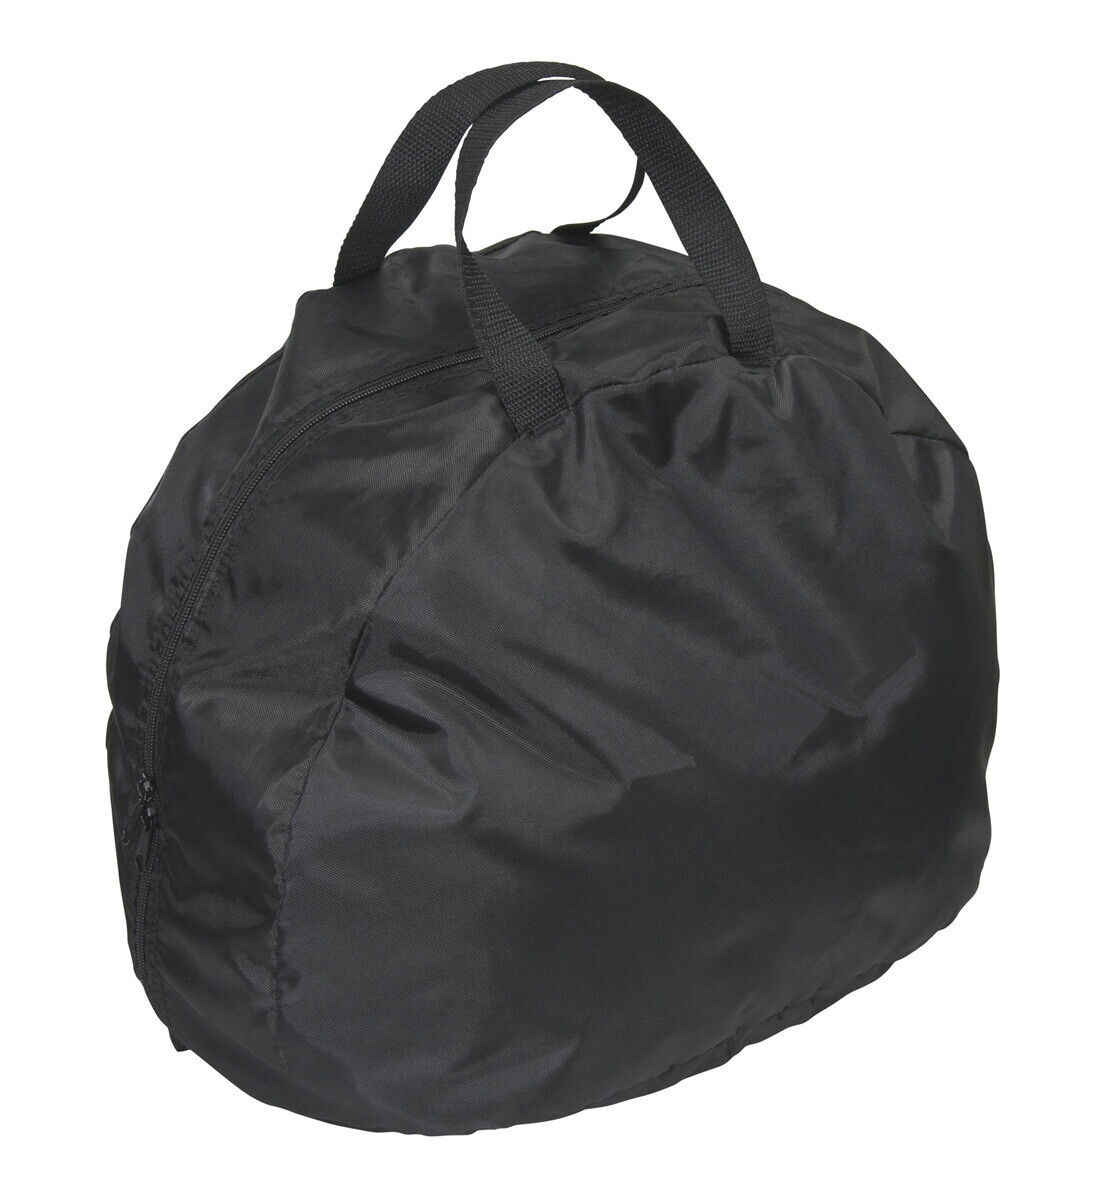 10 Lunatic Premium Helmet Bags - Brand New - Soft Lining - Black